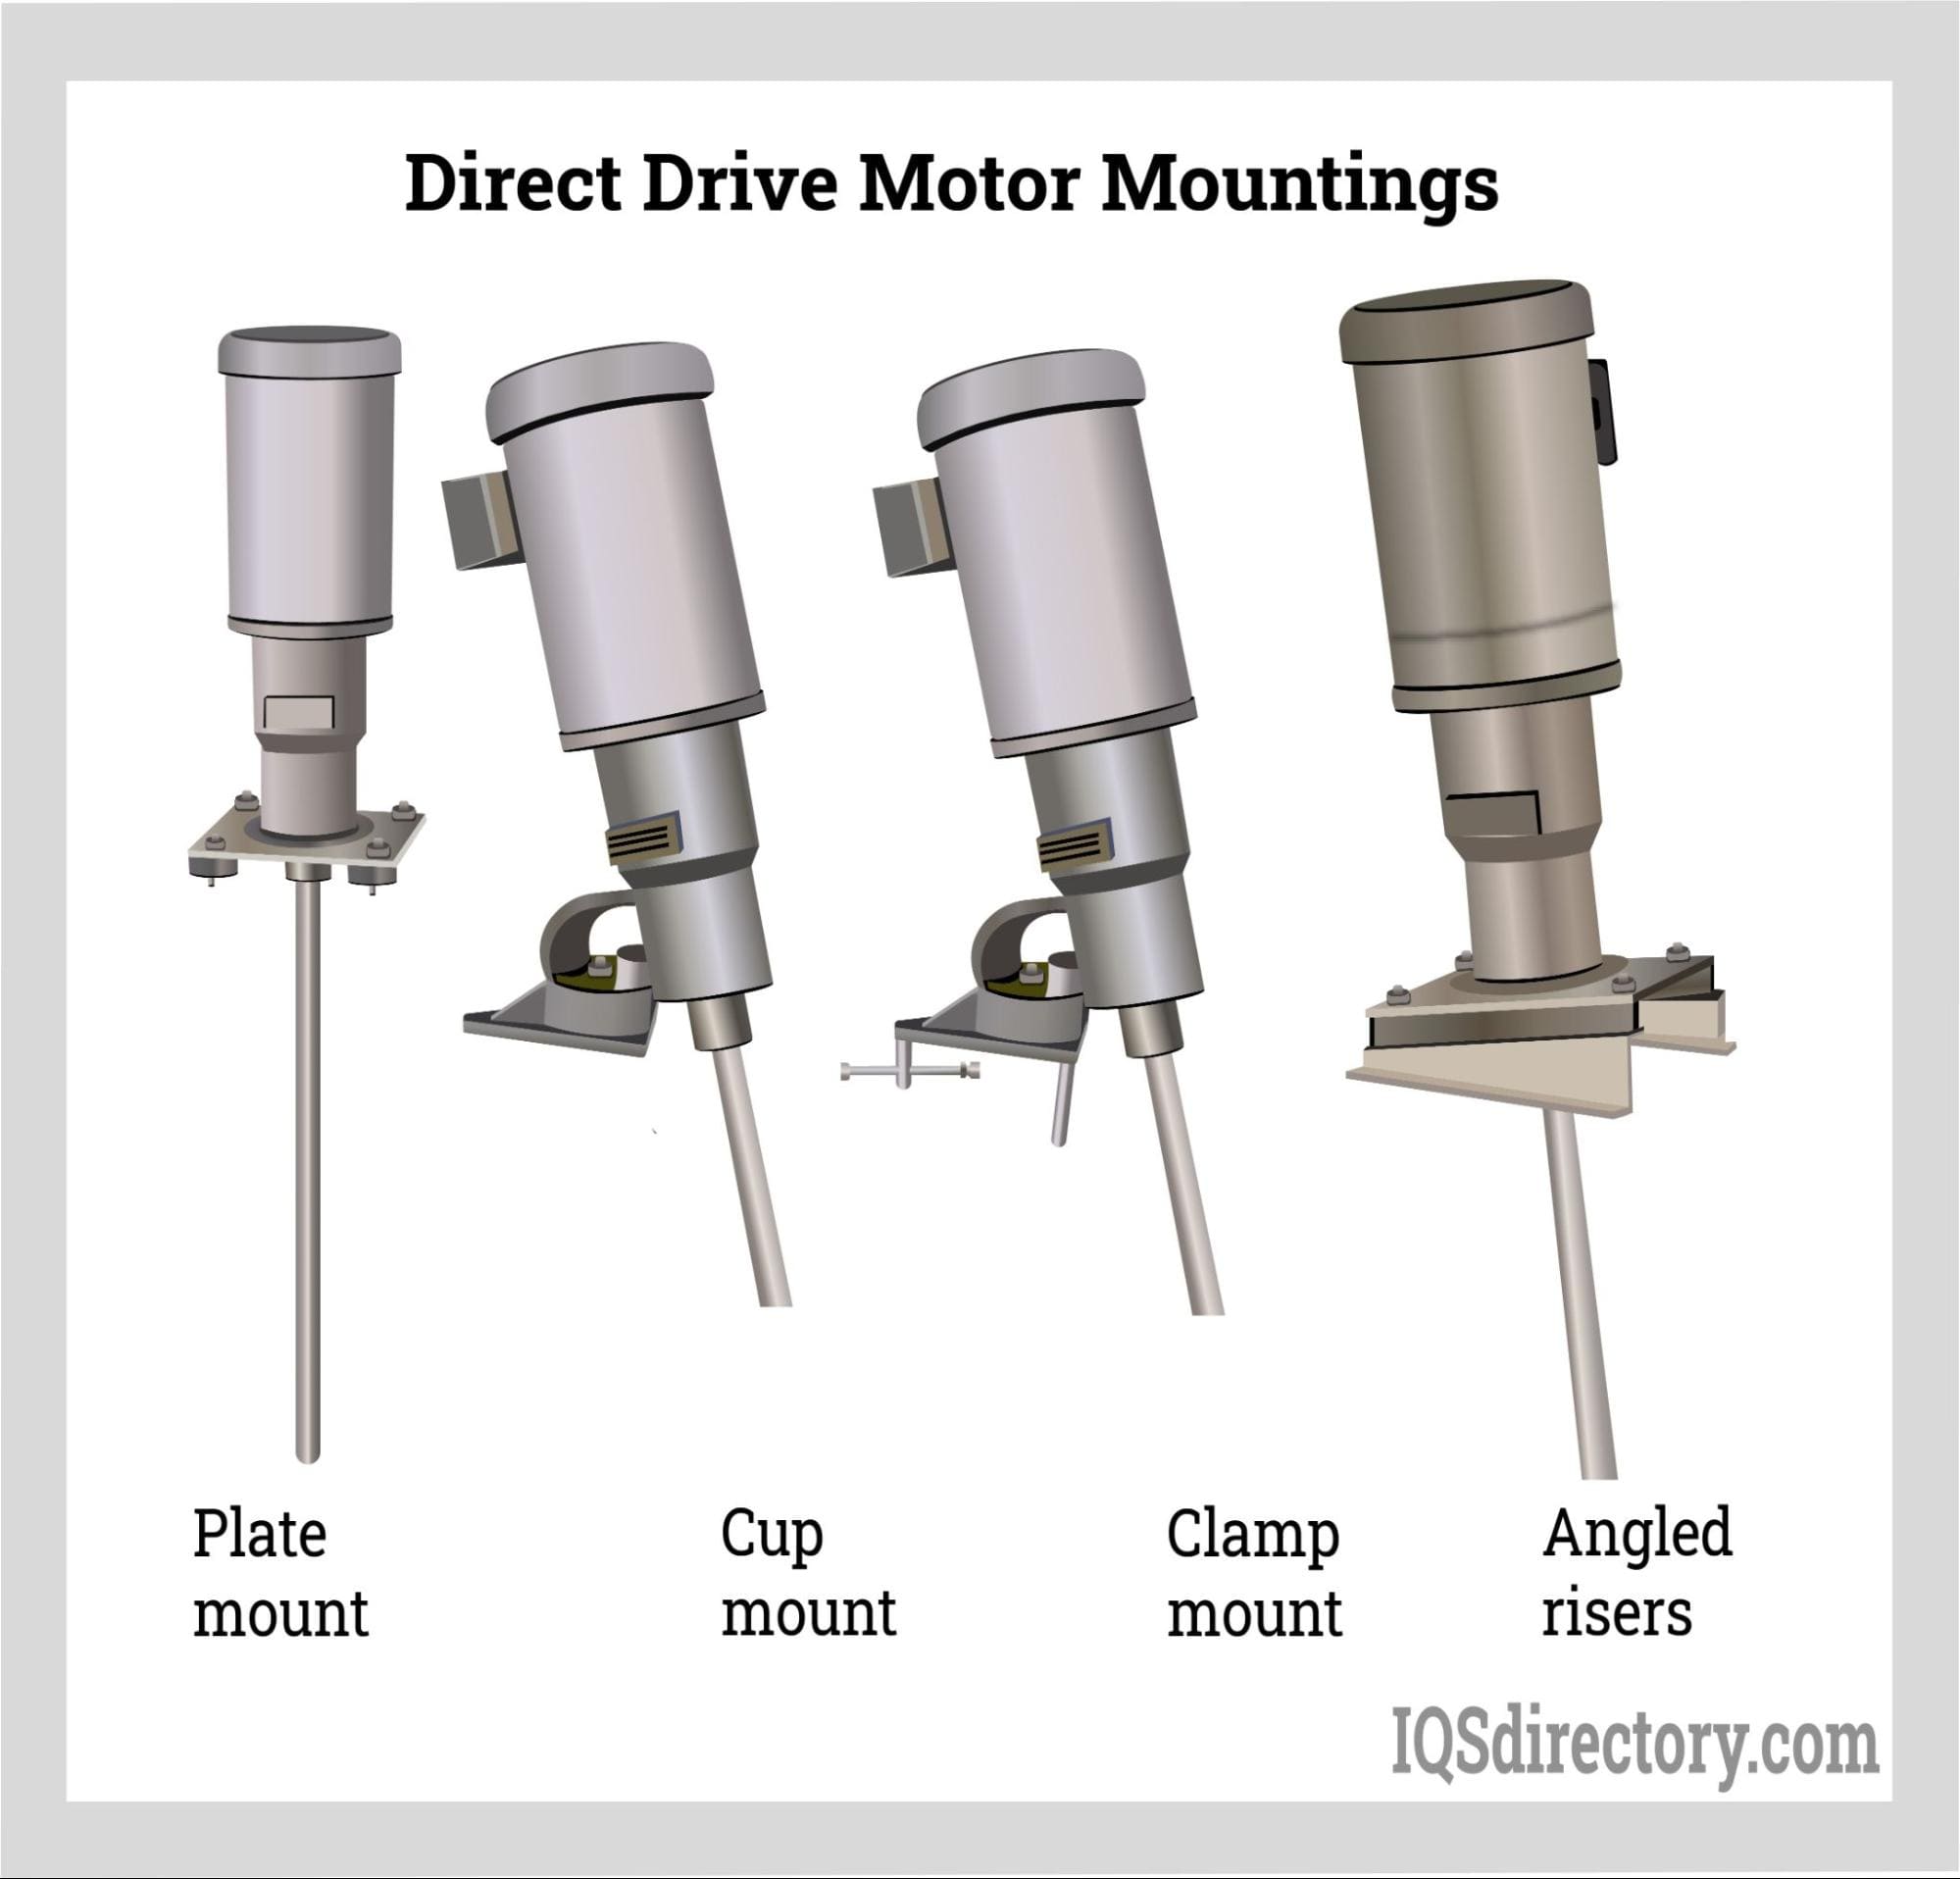 Direct Drive Motor Mountings